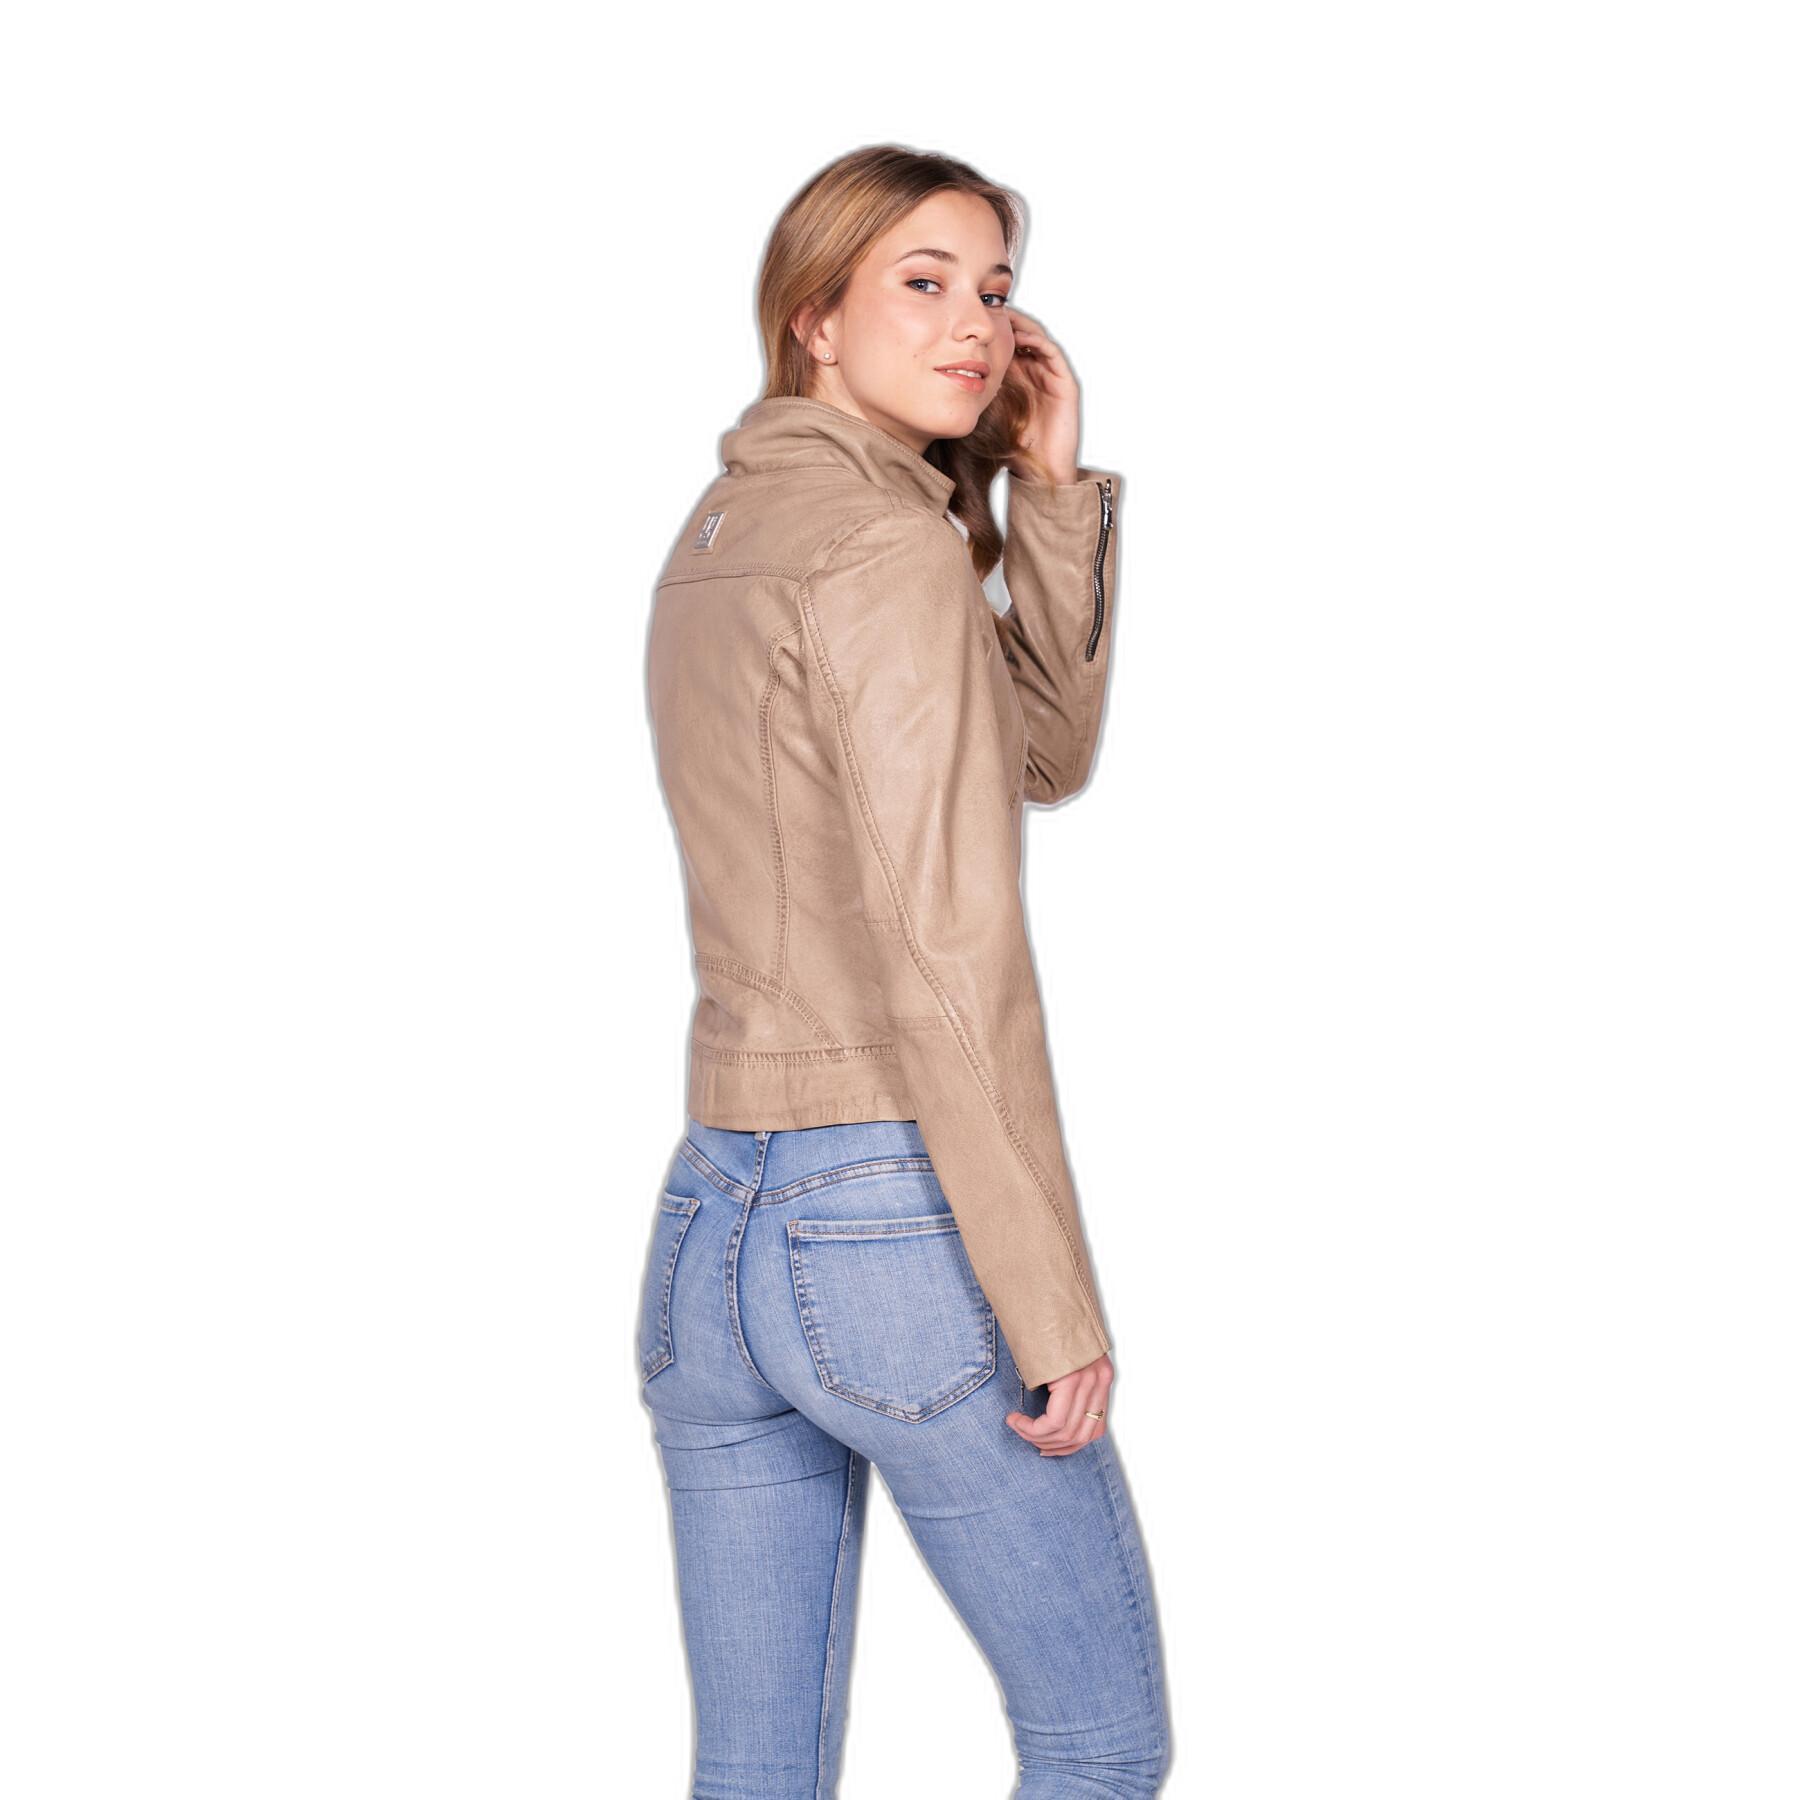 Coats jacket Freaky - Klea - Women\'s Leather Leather Jackets & woman - Jackets Nation Clothing